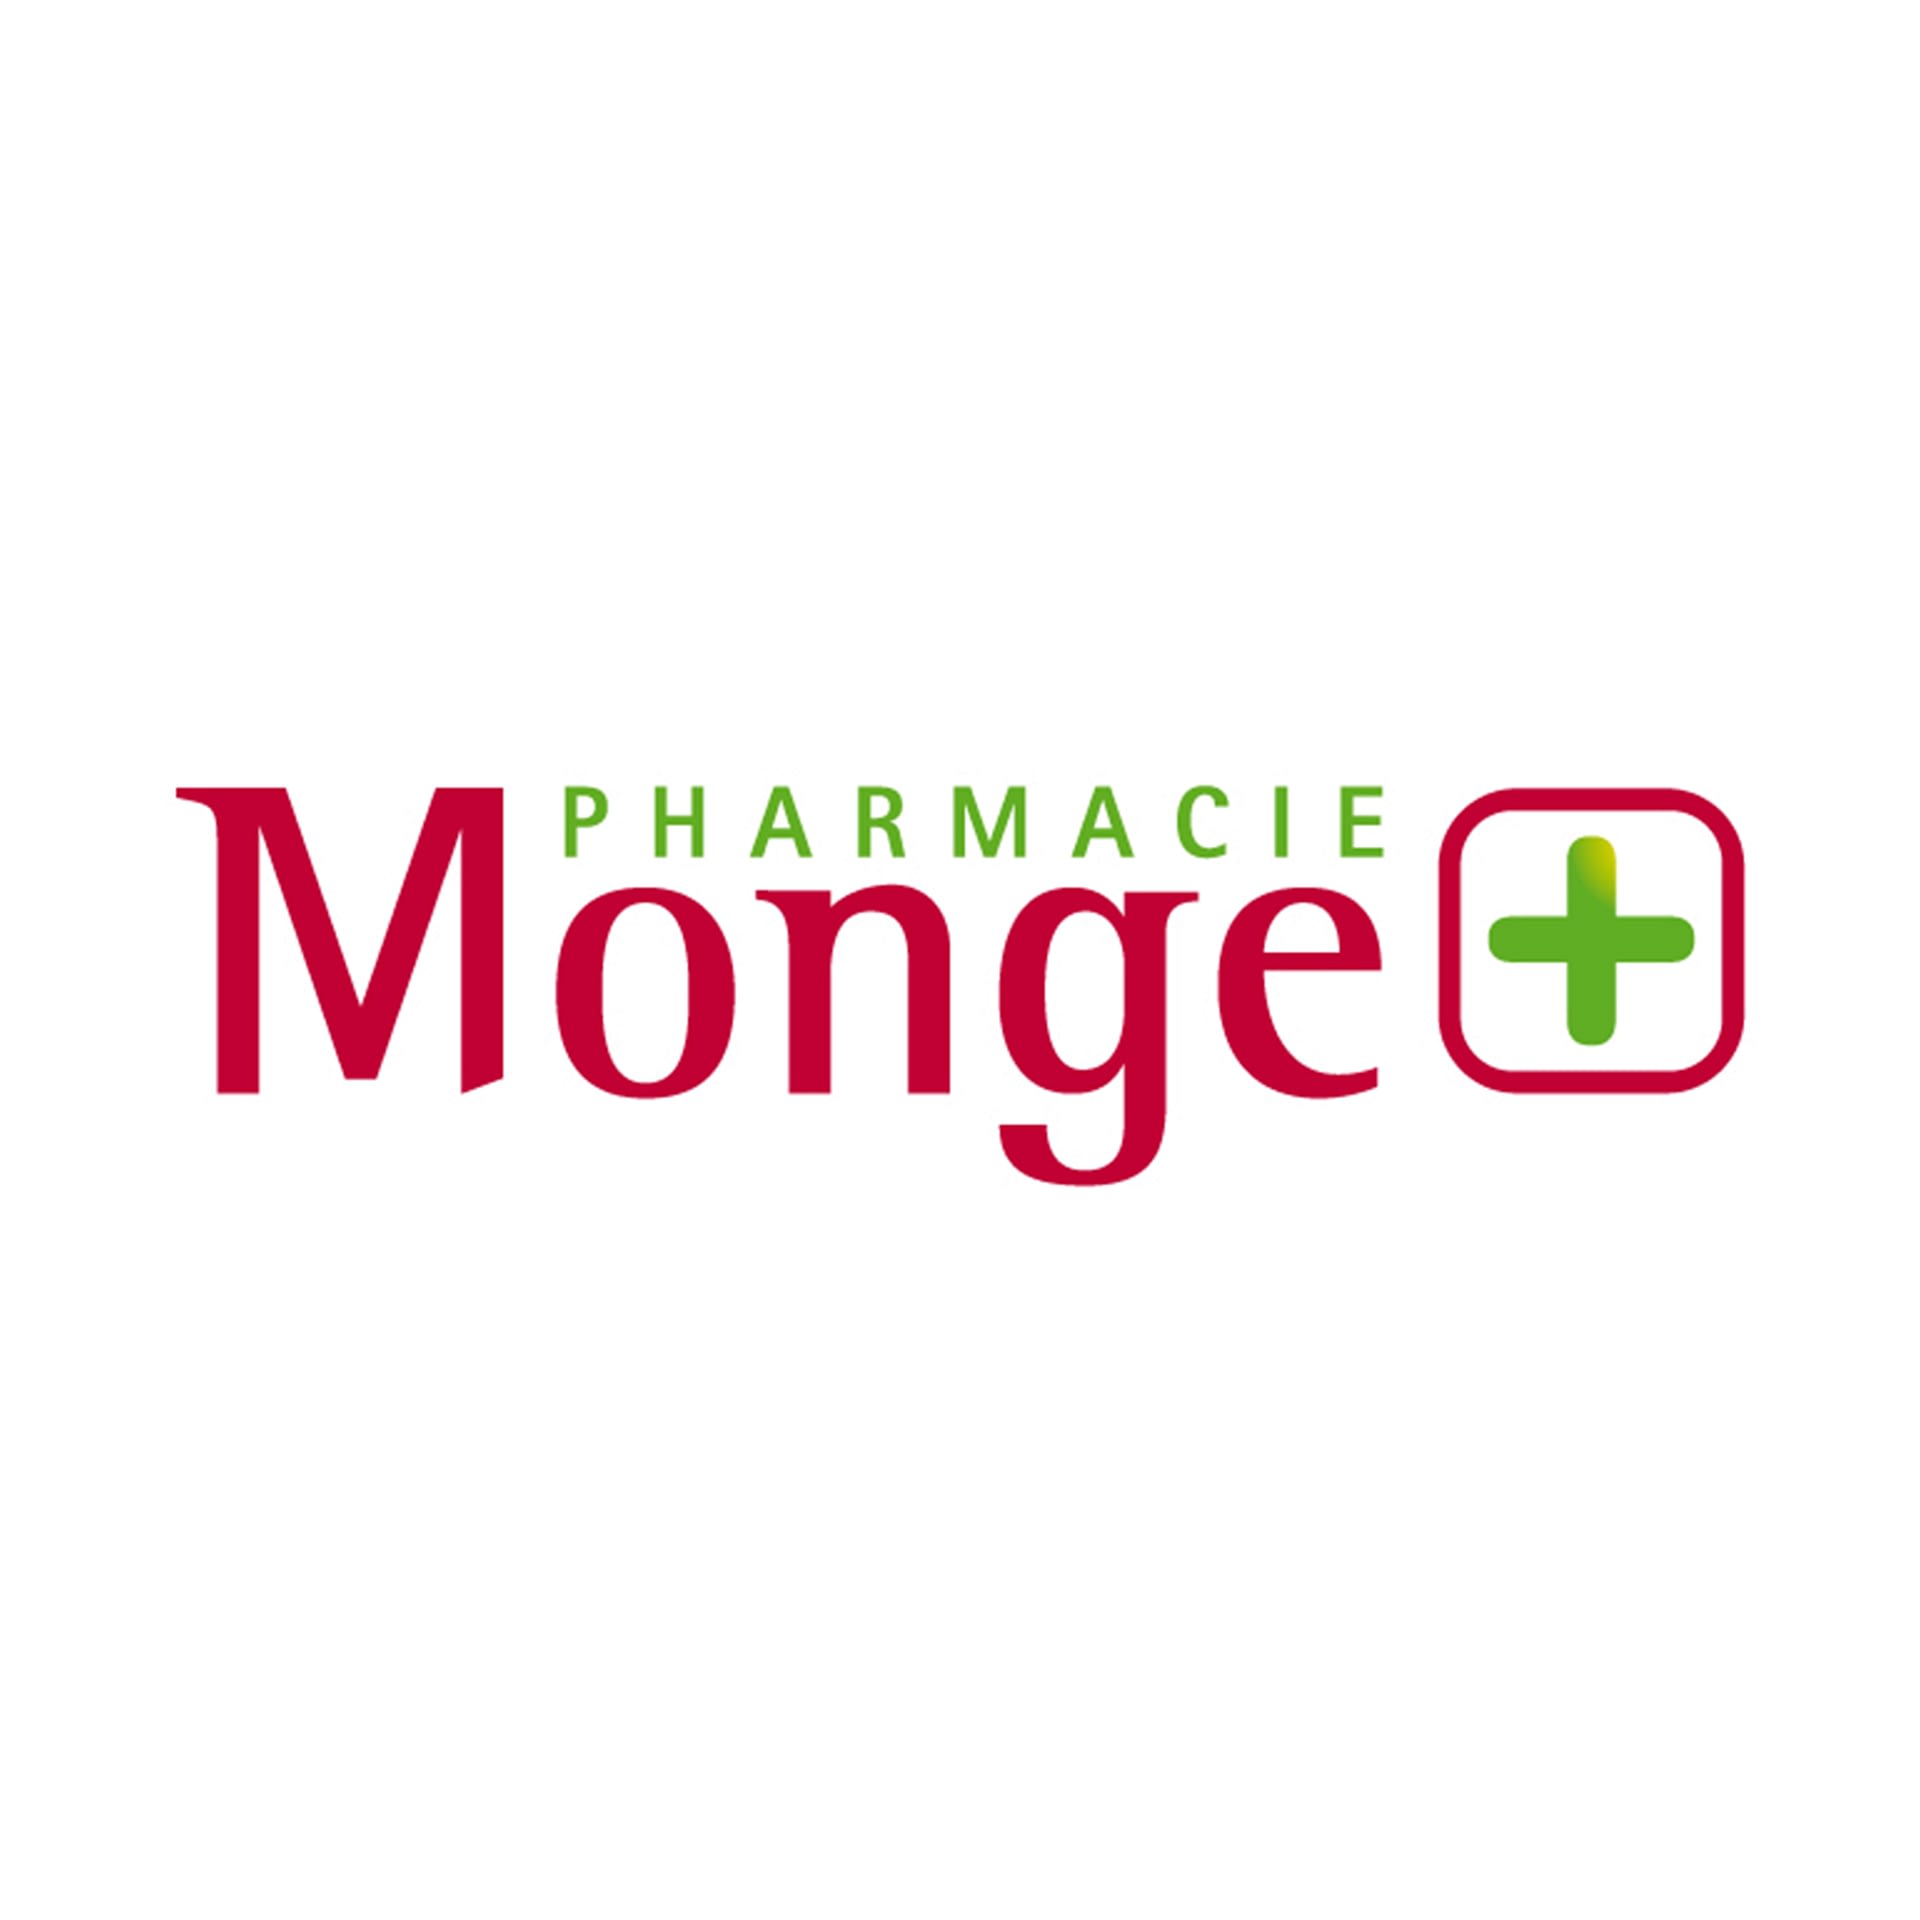 pharmacie-monge